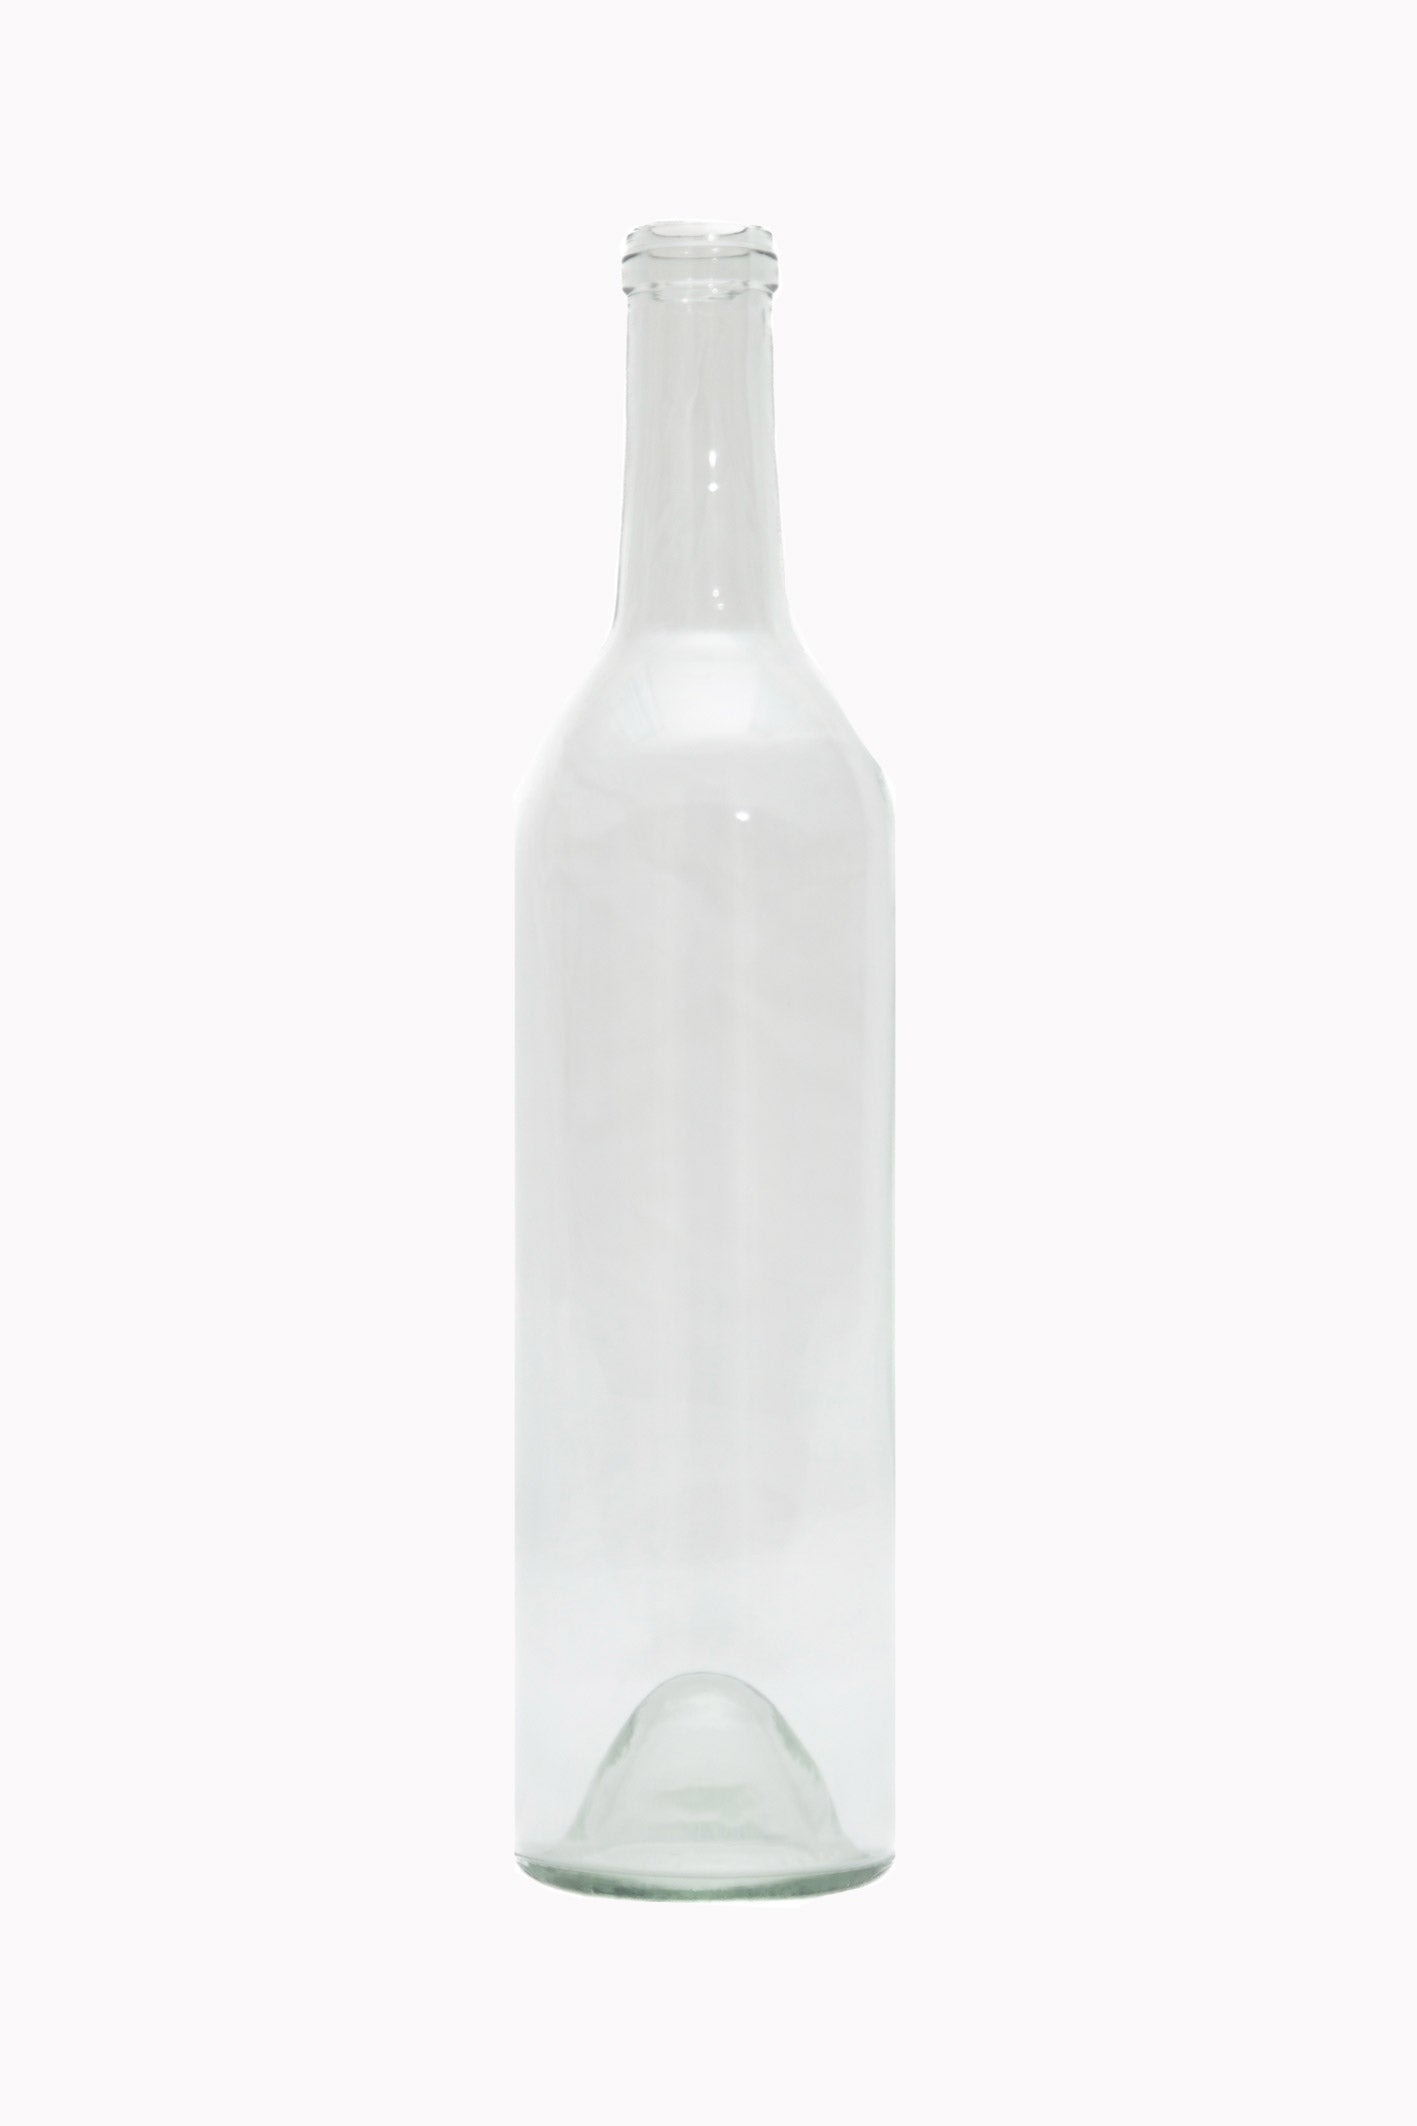 This is 7215 FL, also known as Valentina, California Bottles’ flagship Flint Bordeaux (Claret) bottle.